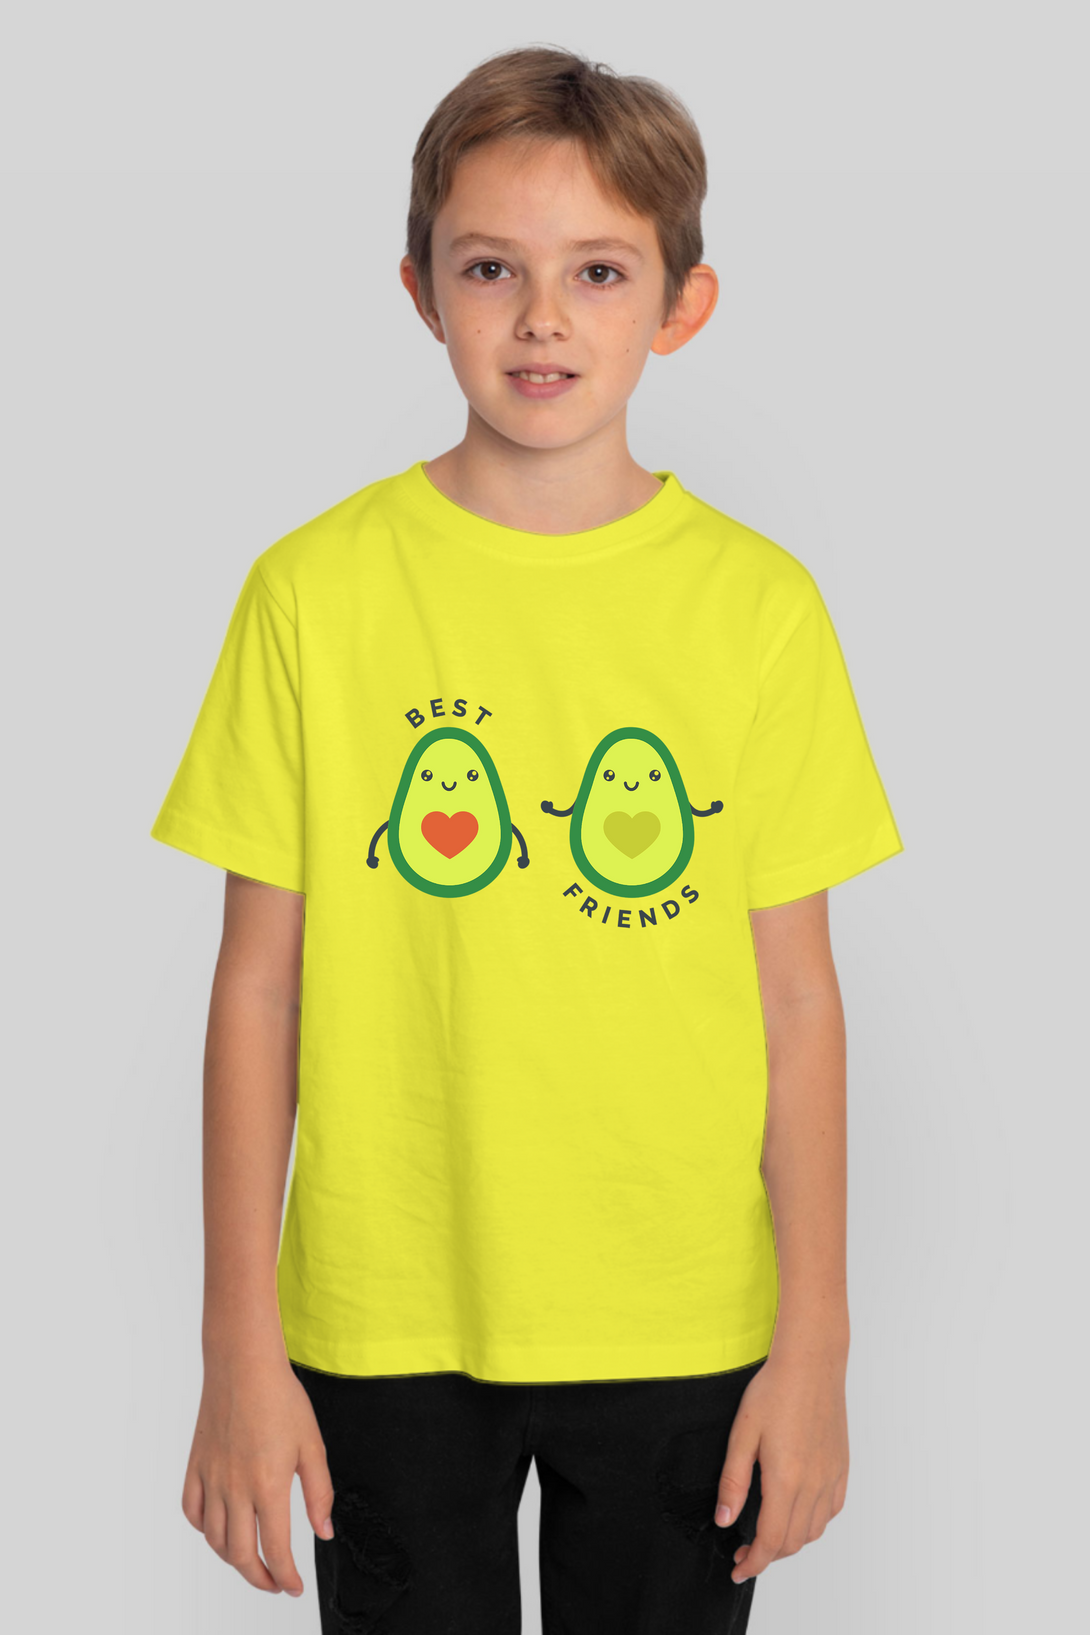 Avocado Friends Printed T-Shirt For Boy - WowWaves - 9